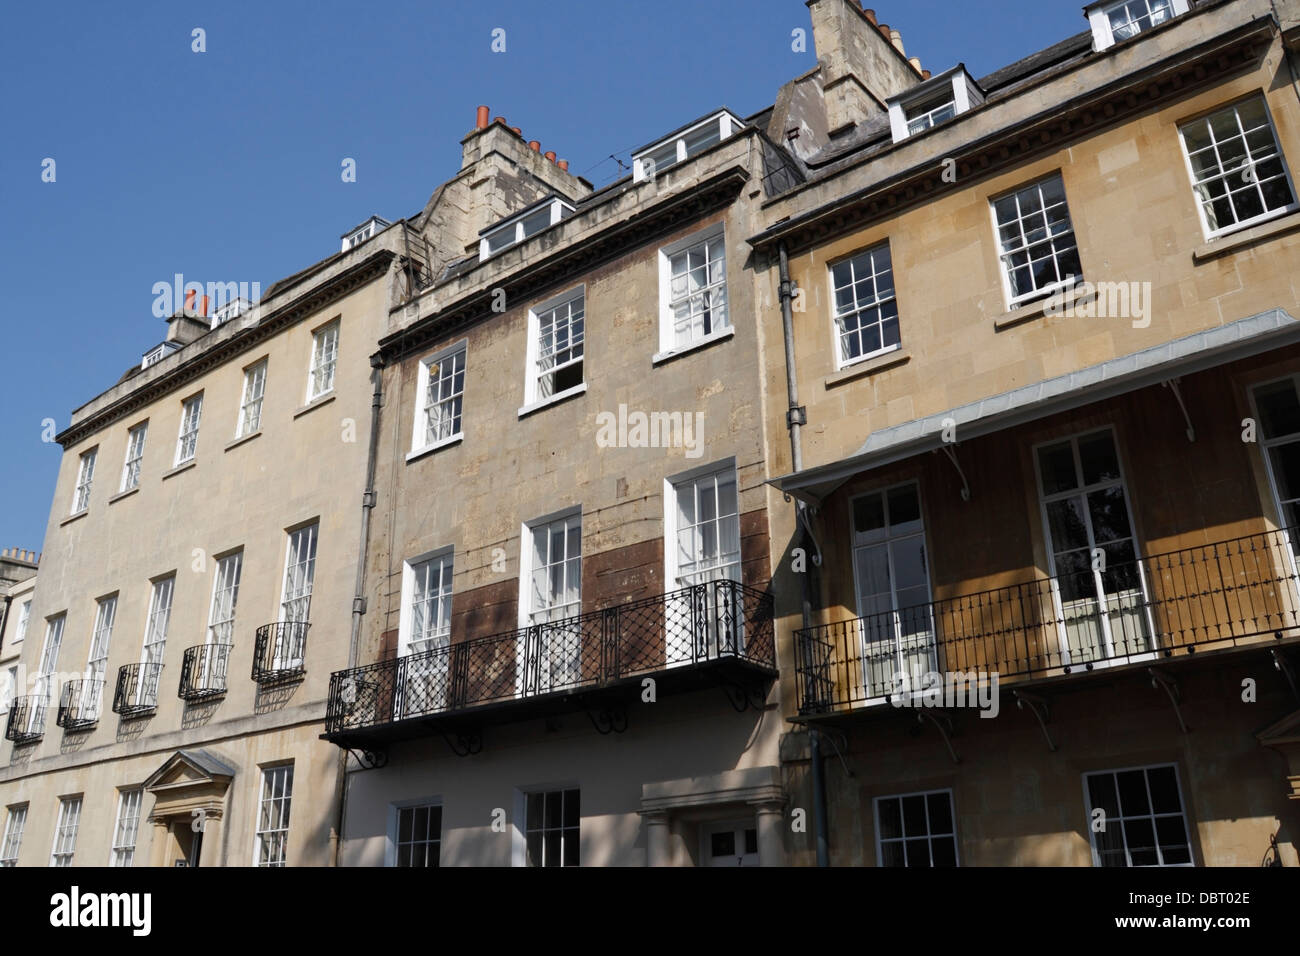 Balconies on Georgian Houses in Bath England. English period properties Bath townhouses World heritage site Stock Photo